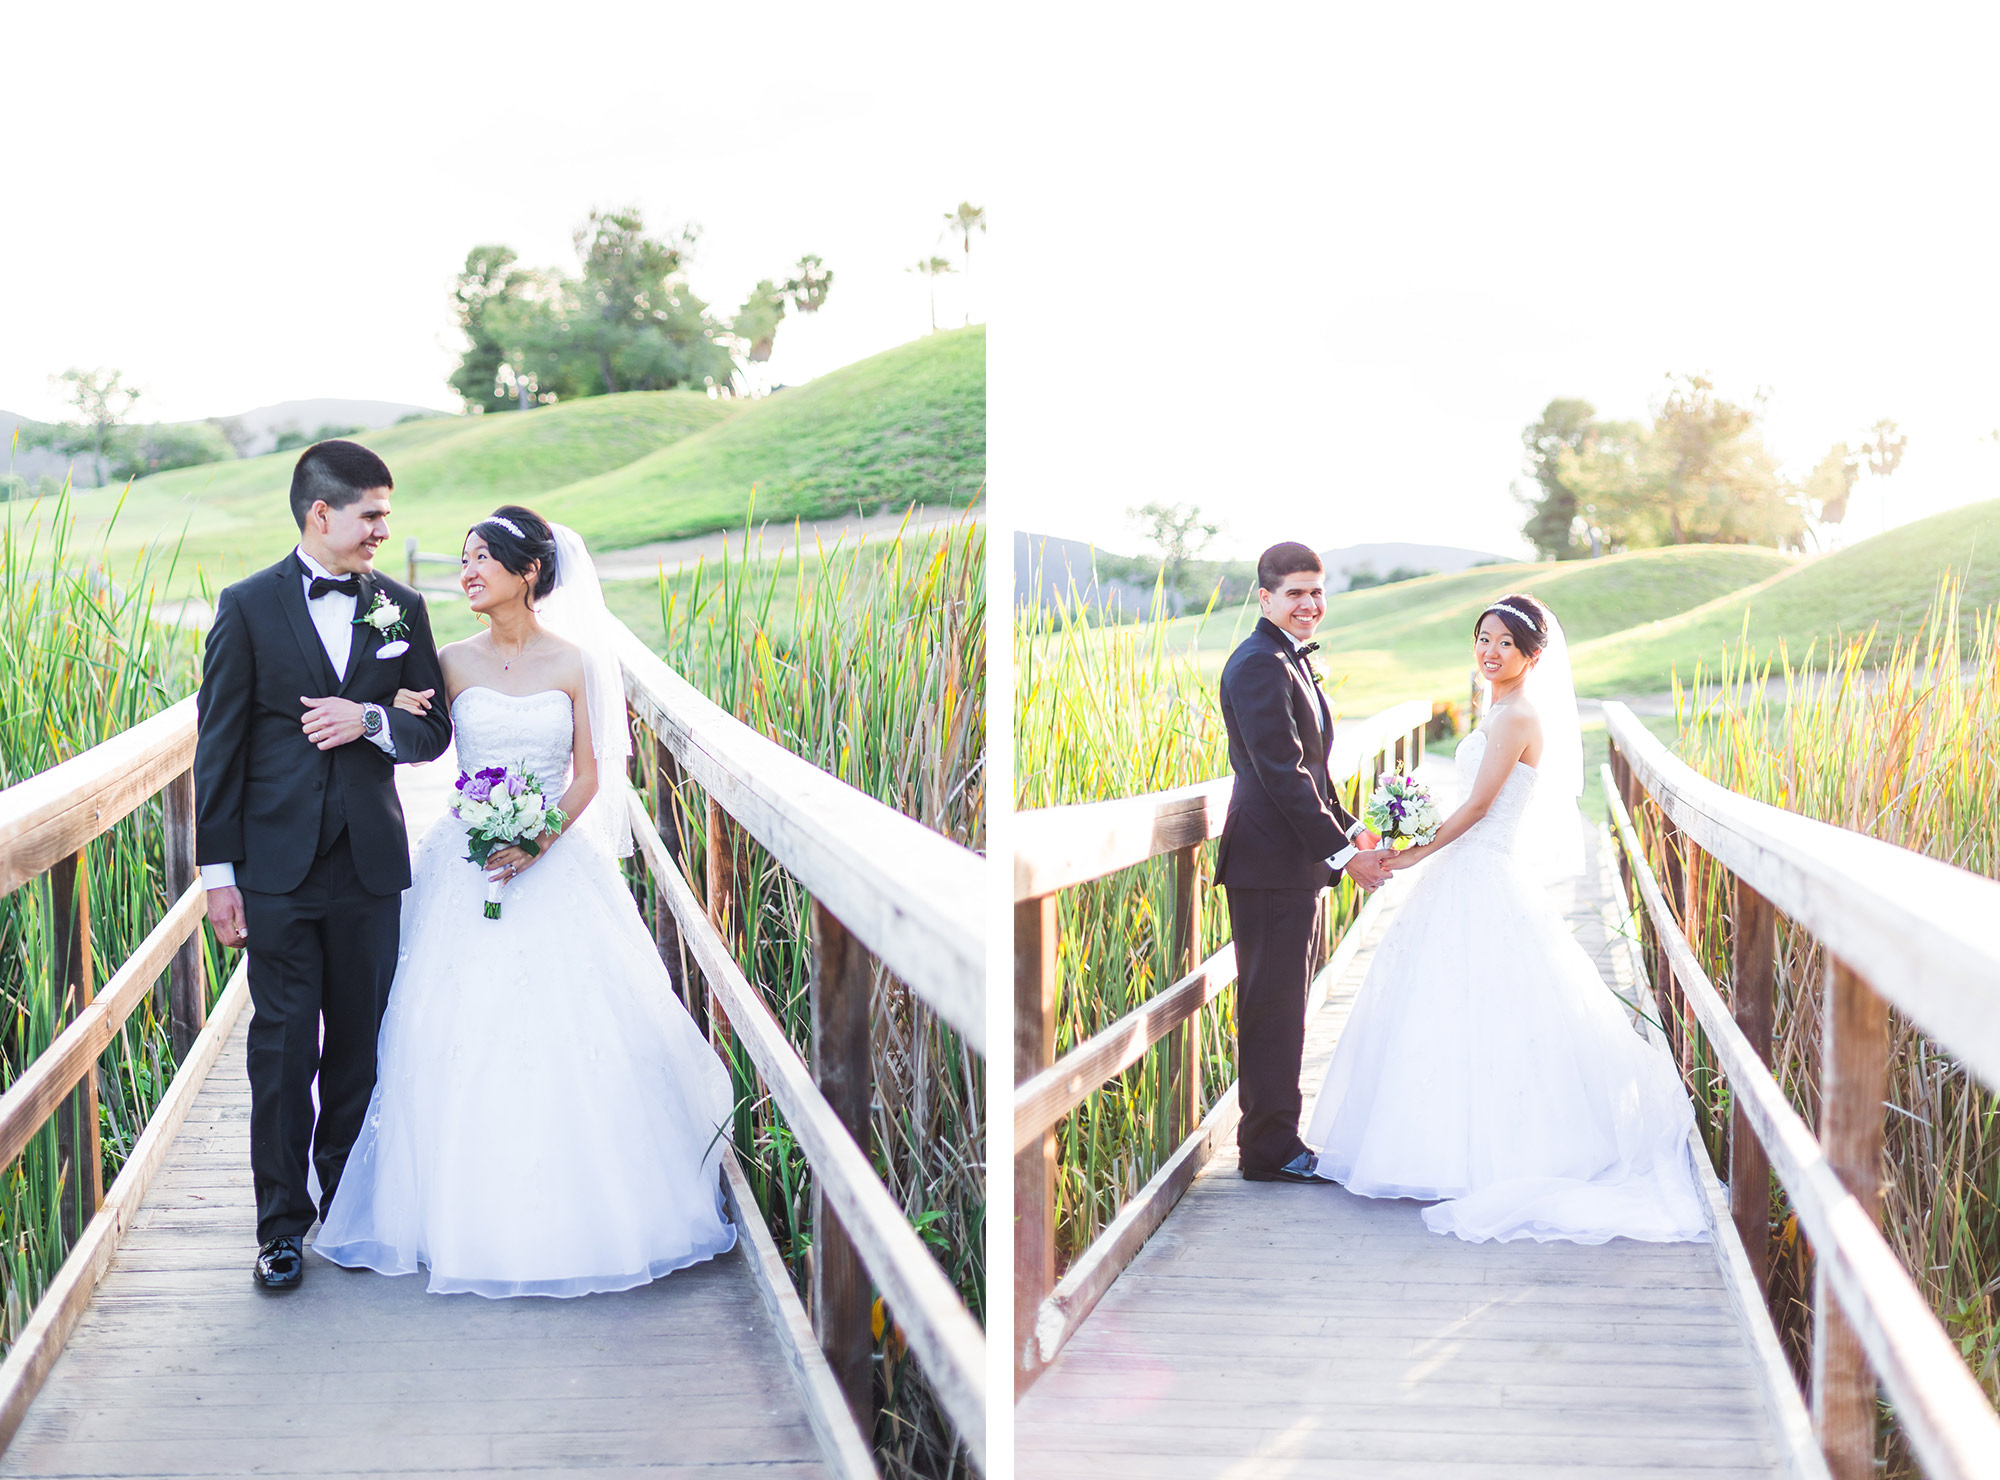 Somerville Wedding Photographer | Stephen Grant Photography